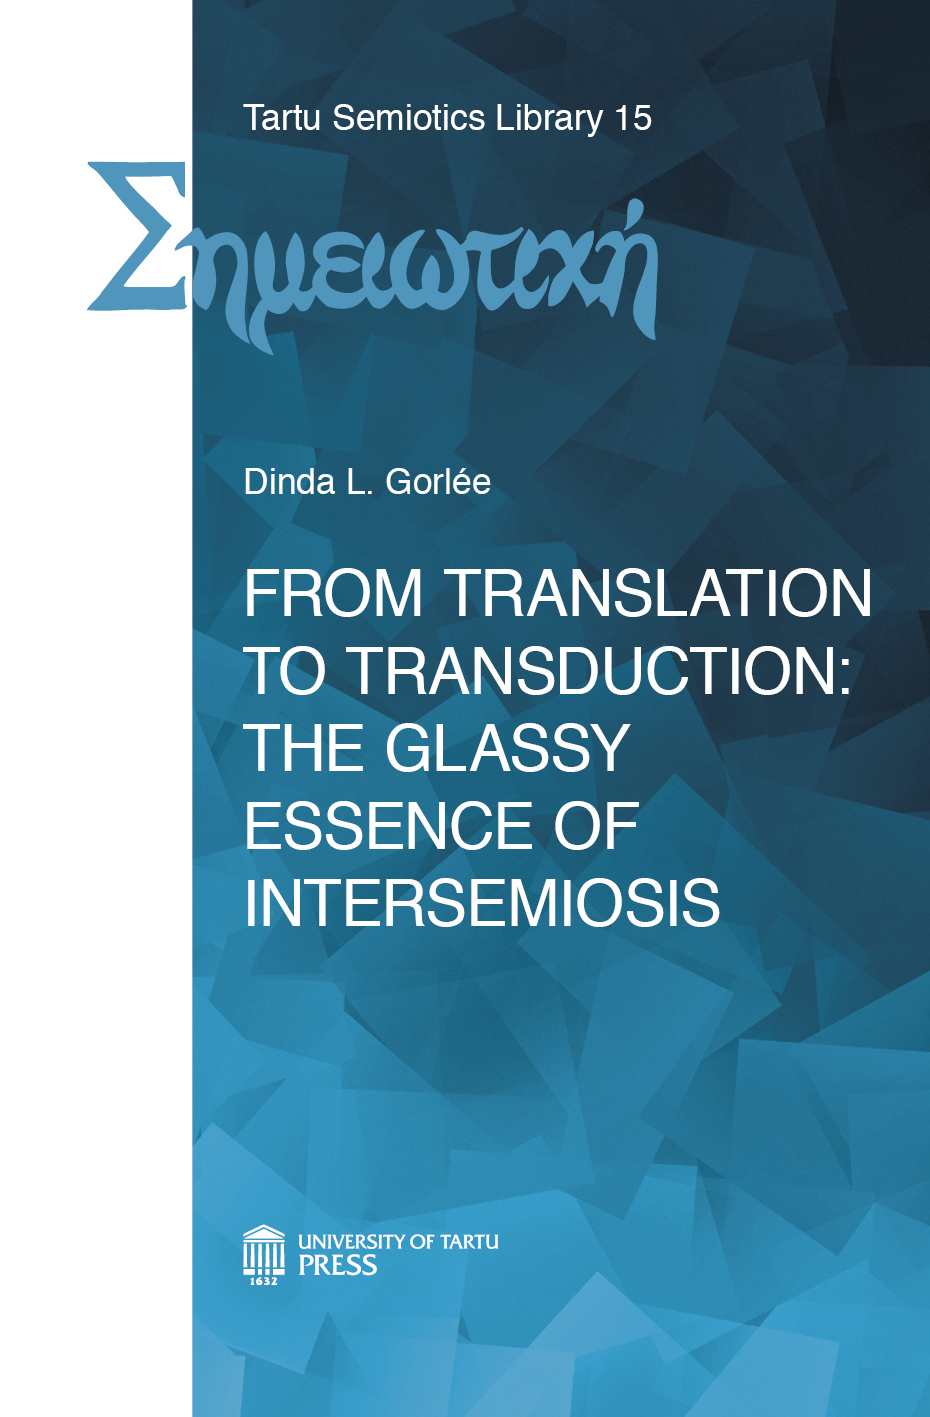 Translation and Semiotranslation